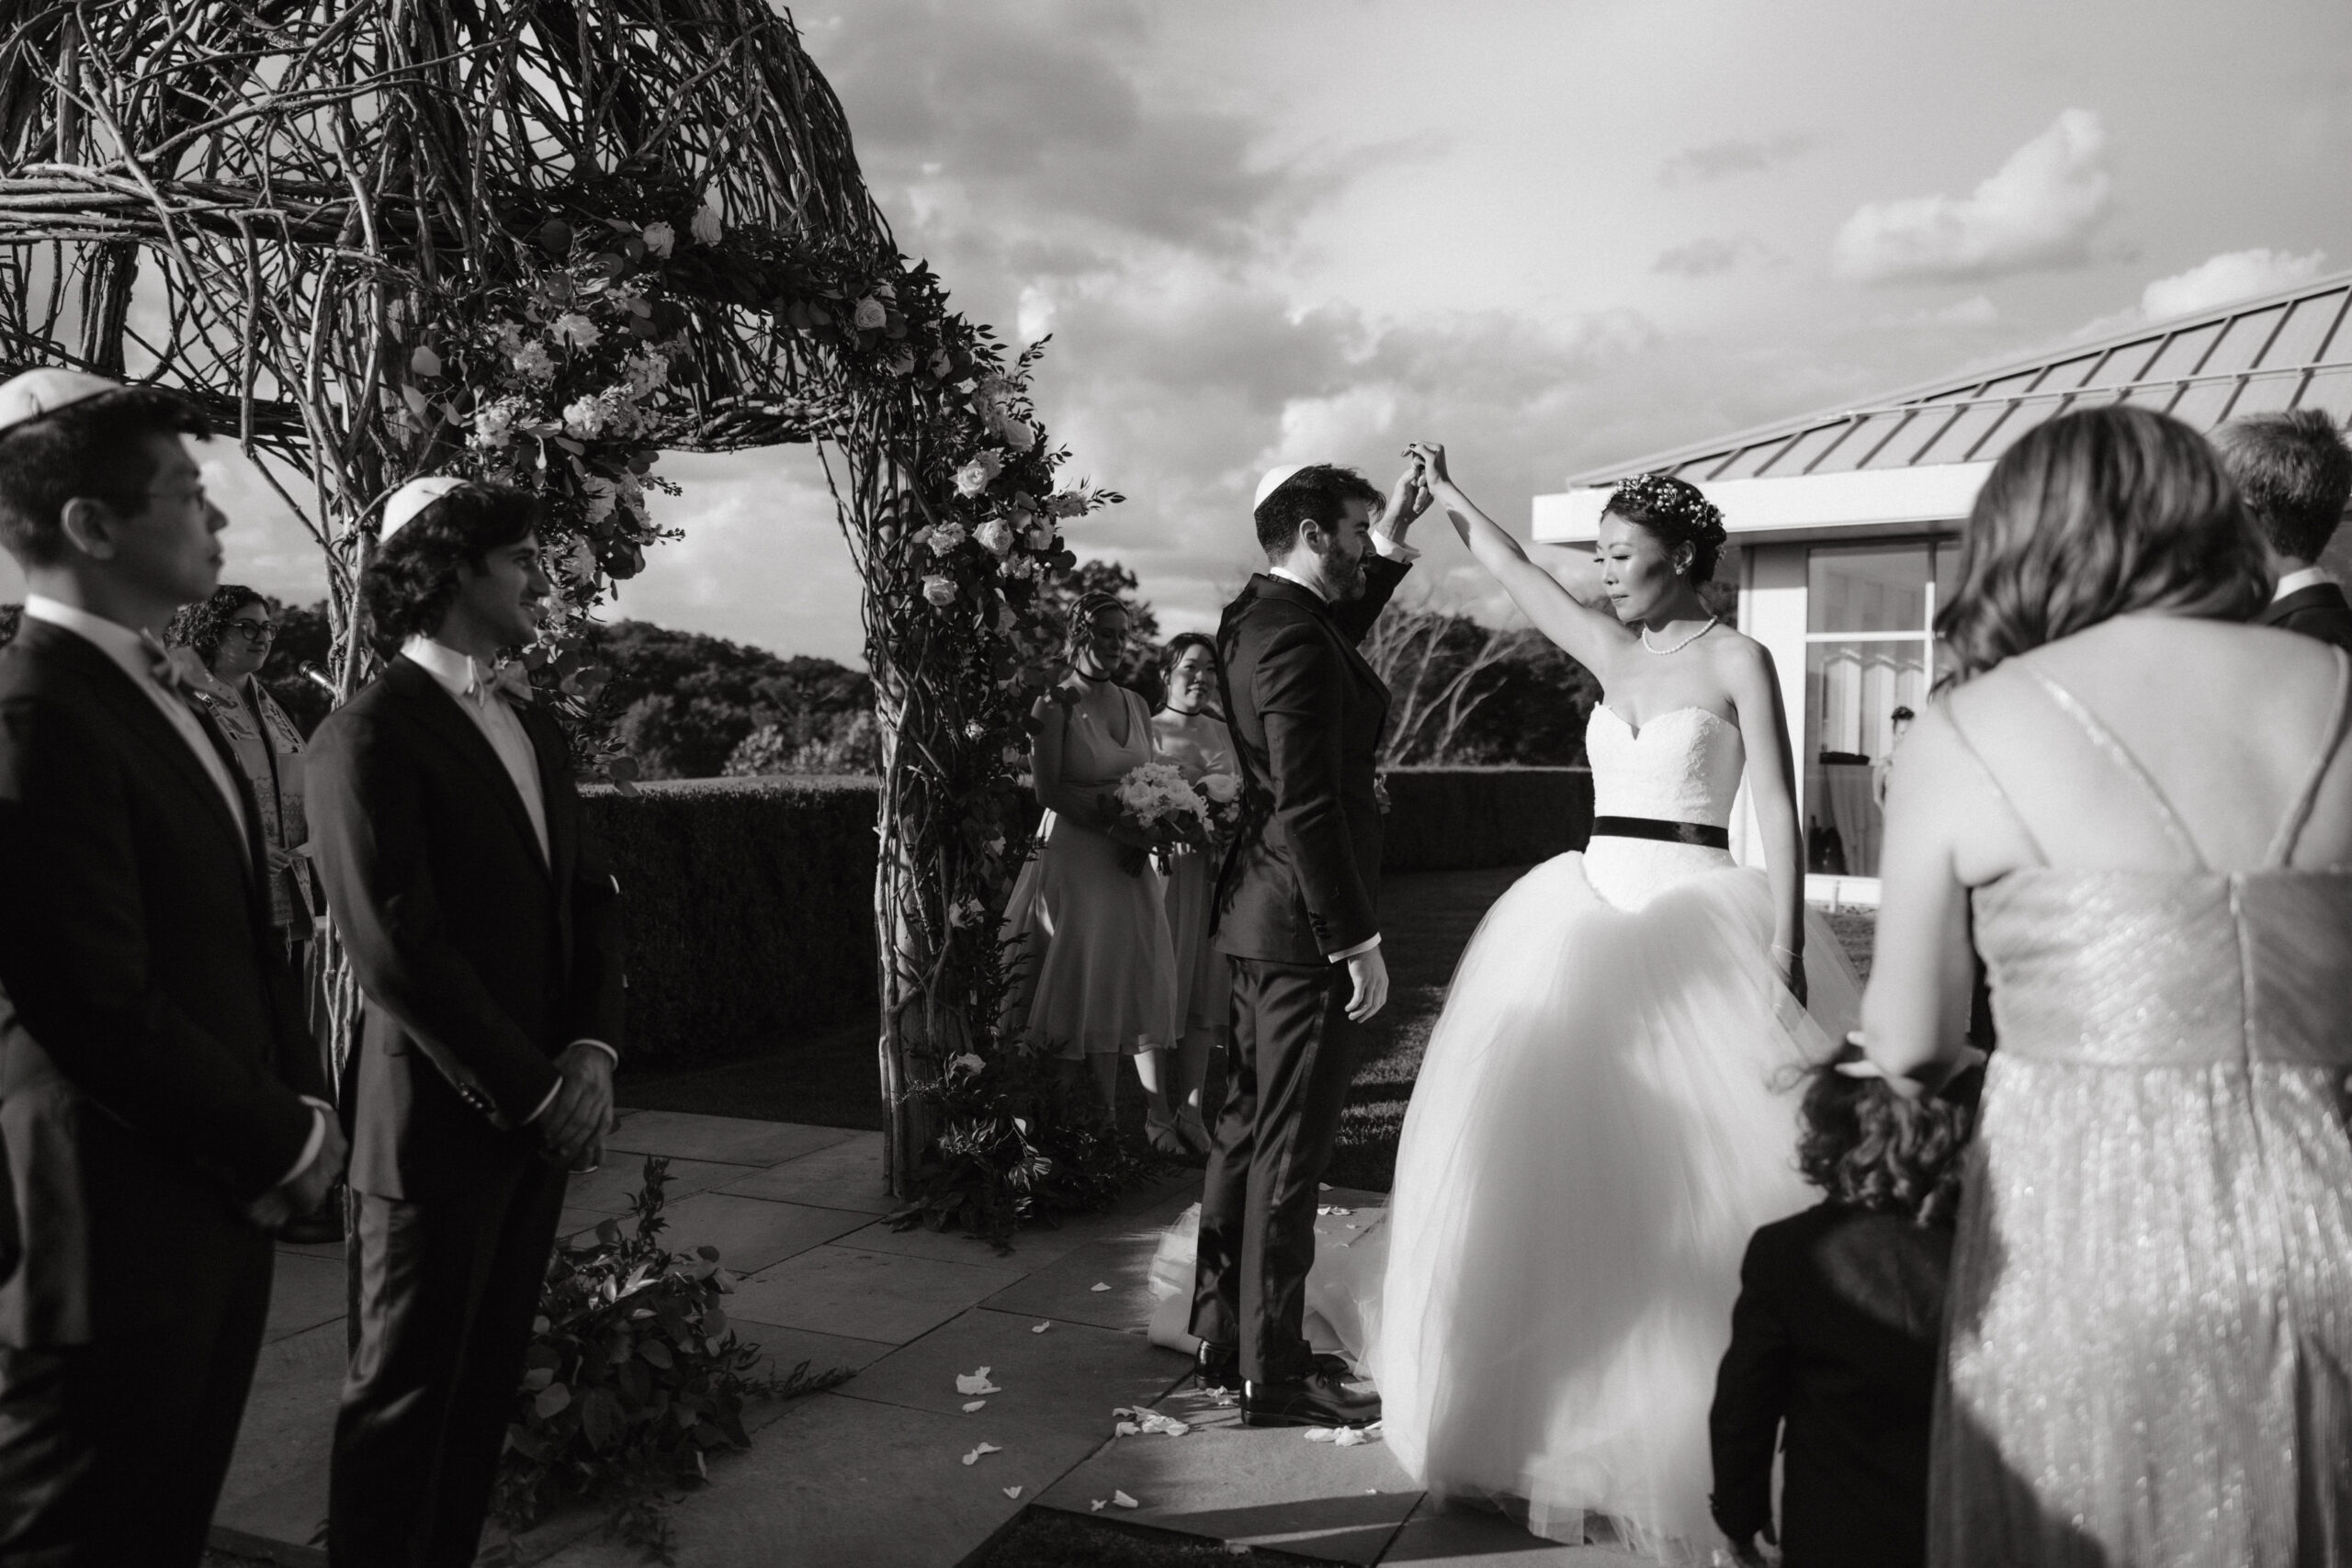 Wedding ceremony outdoors. Black and white wedding photography image by Jenny Fu Studio